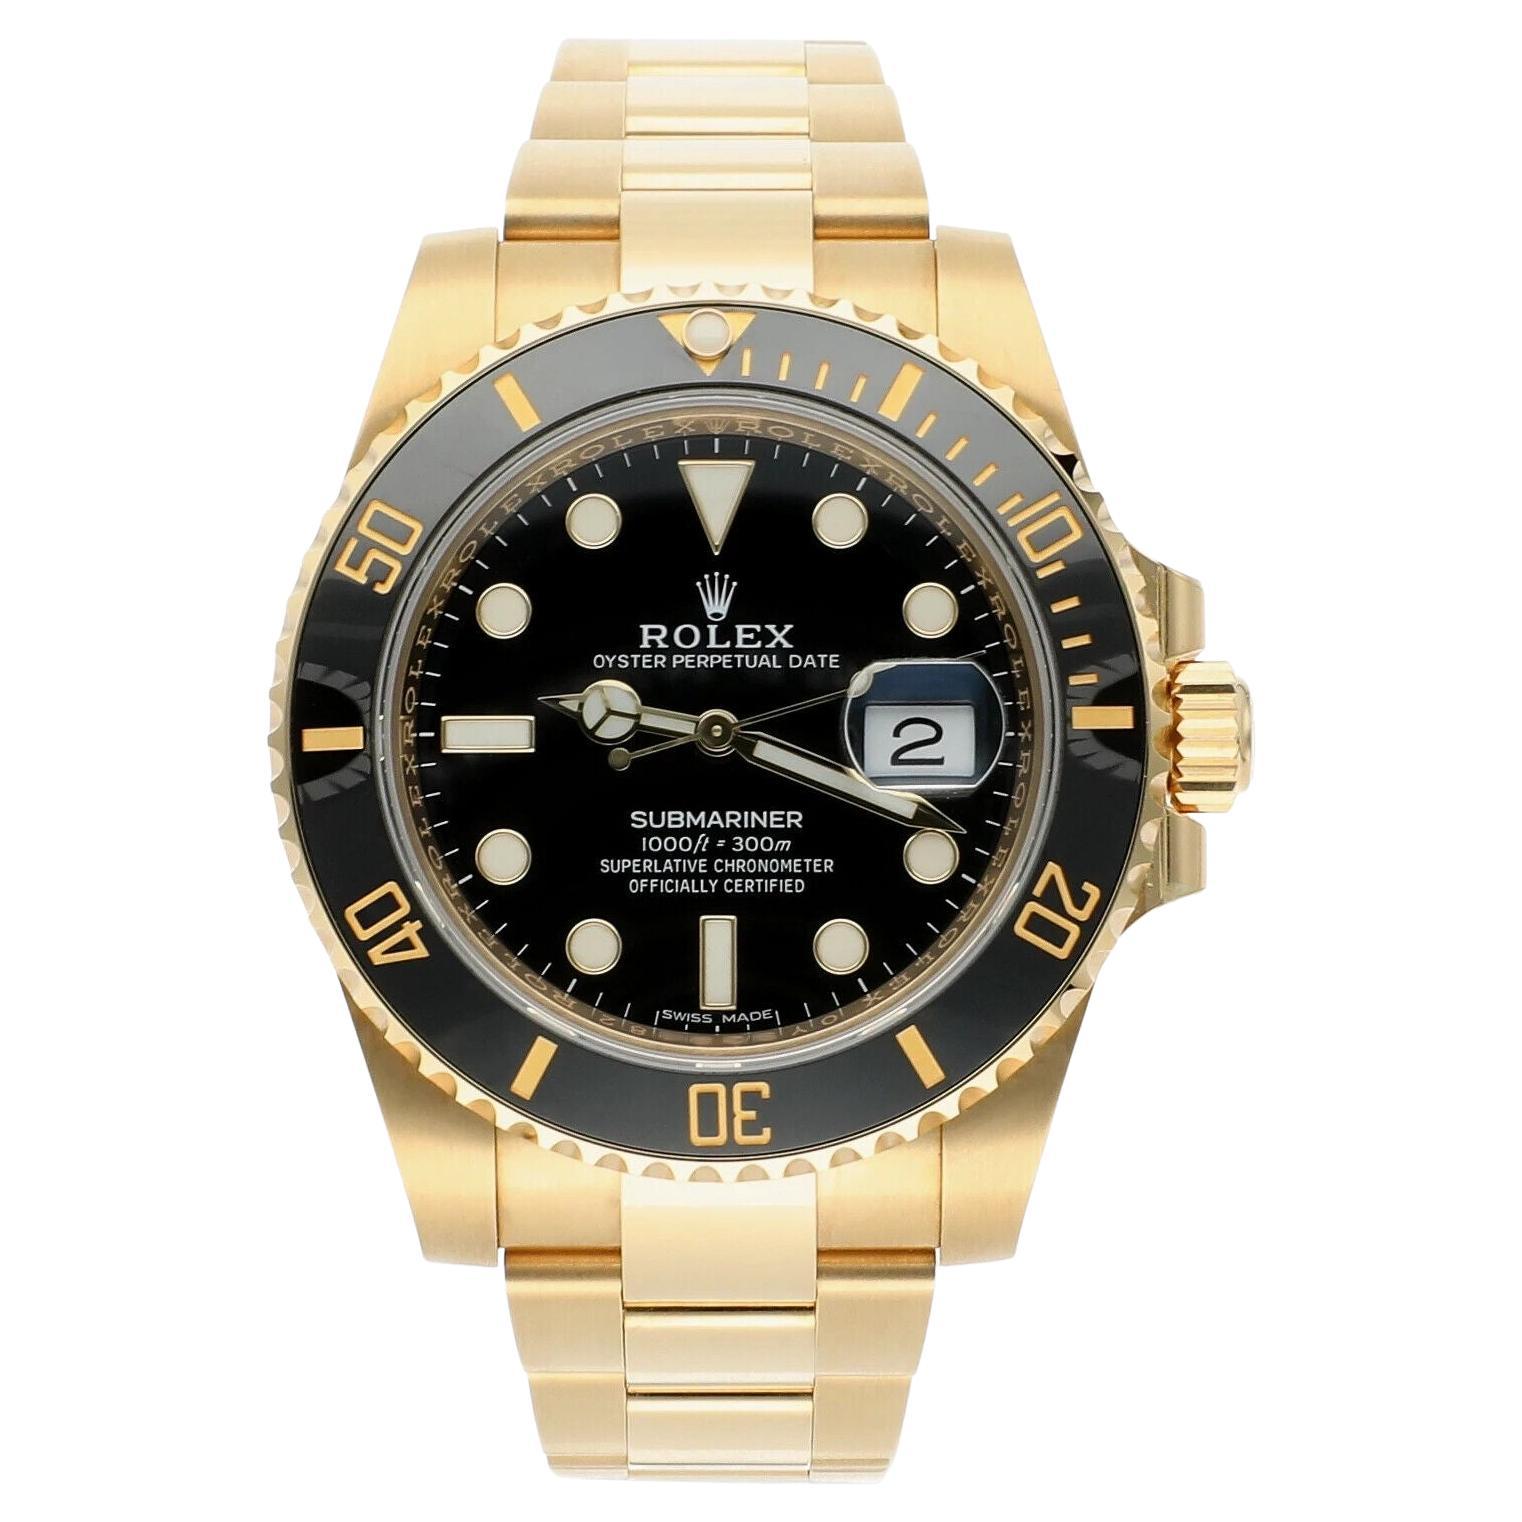 Rolex Submariner Date Ceramic Bezel Yellow Gold Black 116618LN Men's Watch